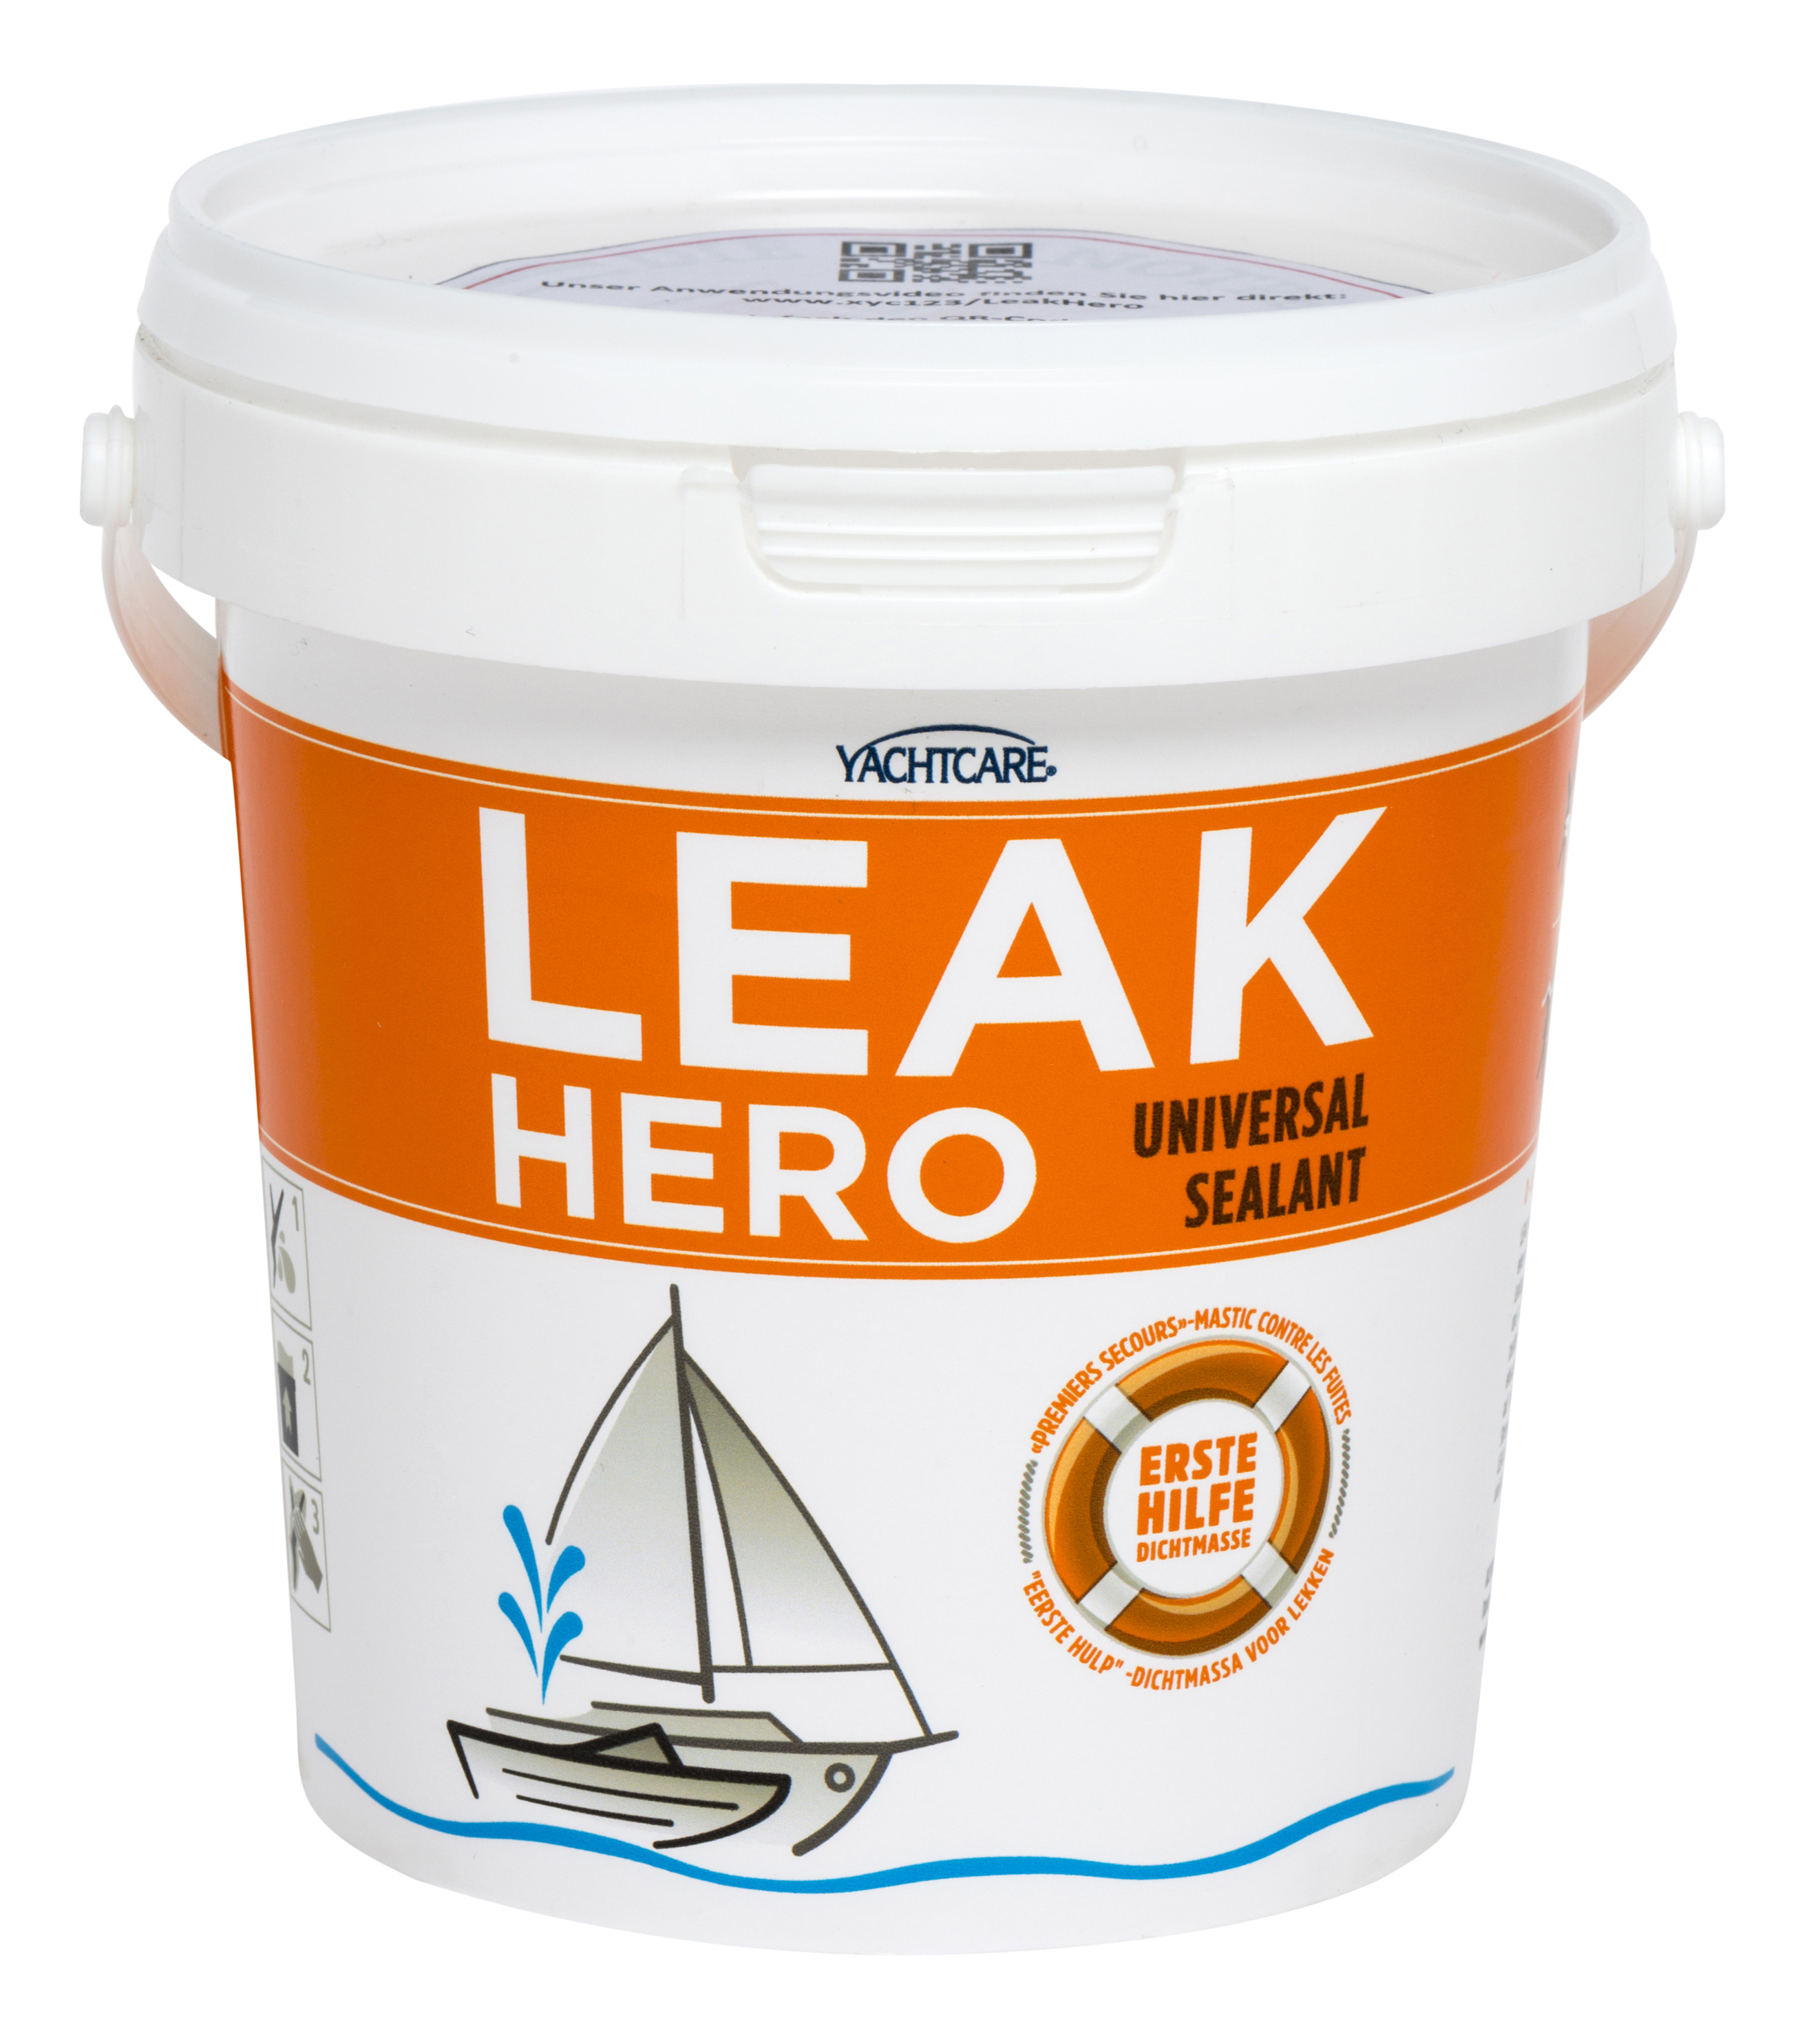 Leak Hero-Leckabdichtung